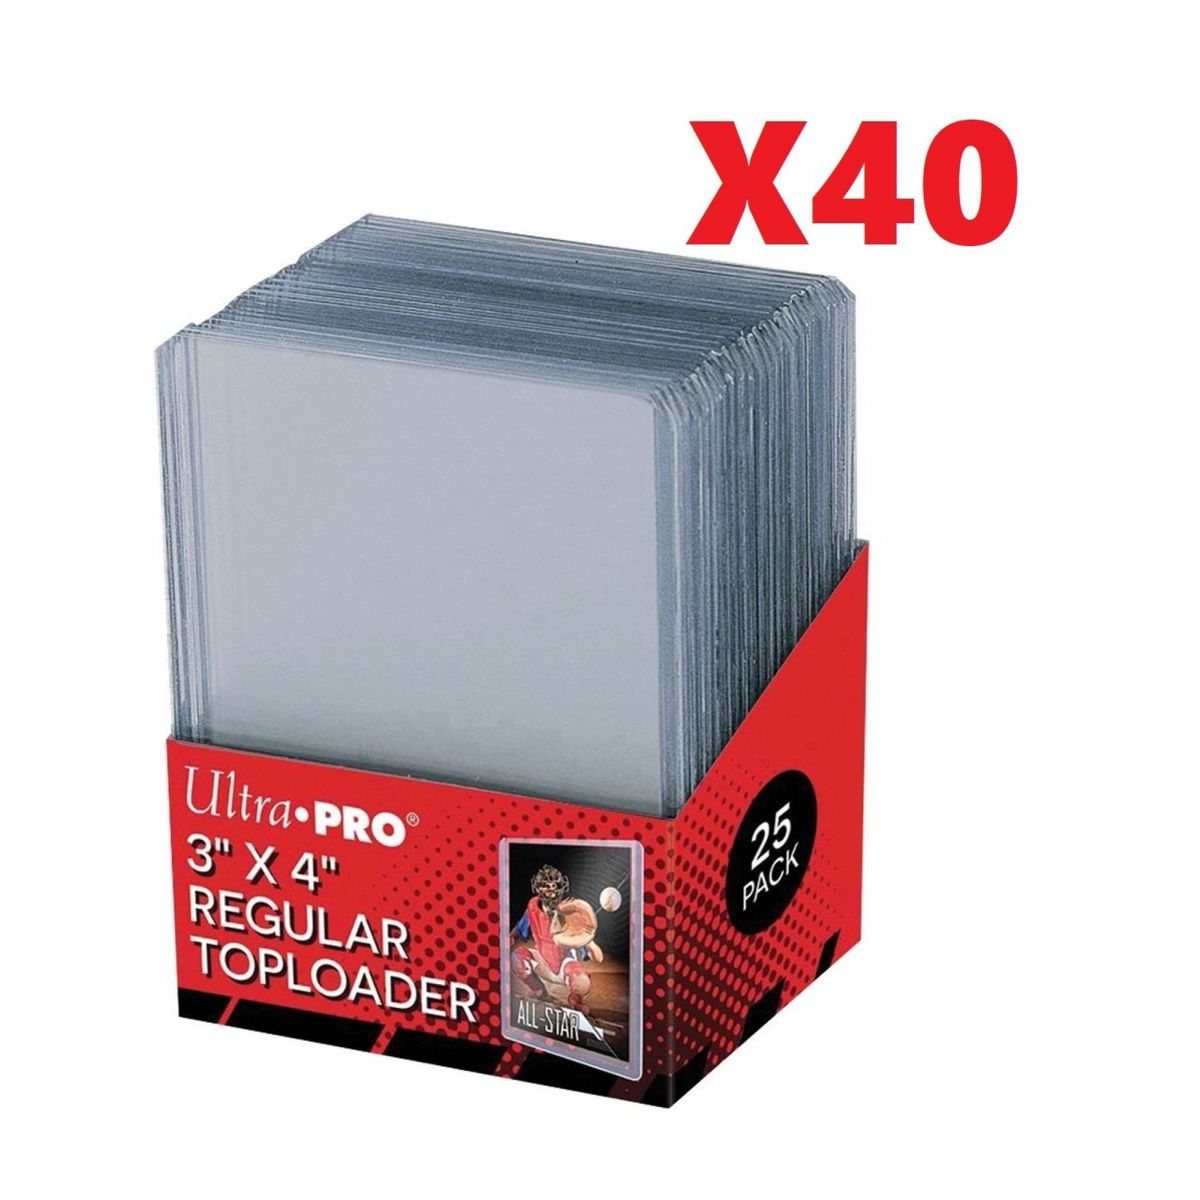 Item Ultra Pro - Pack - Rigid Card Sleeves - Top Loader (40)